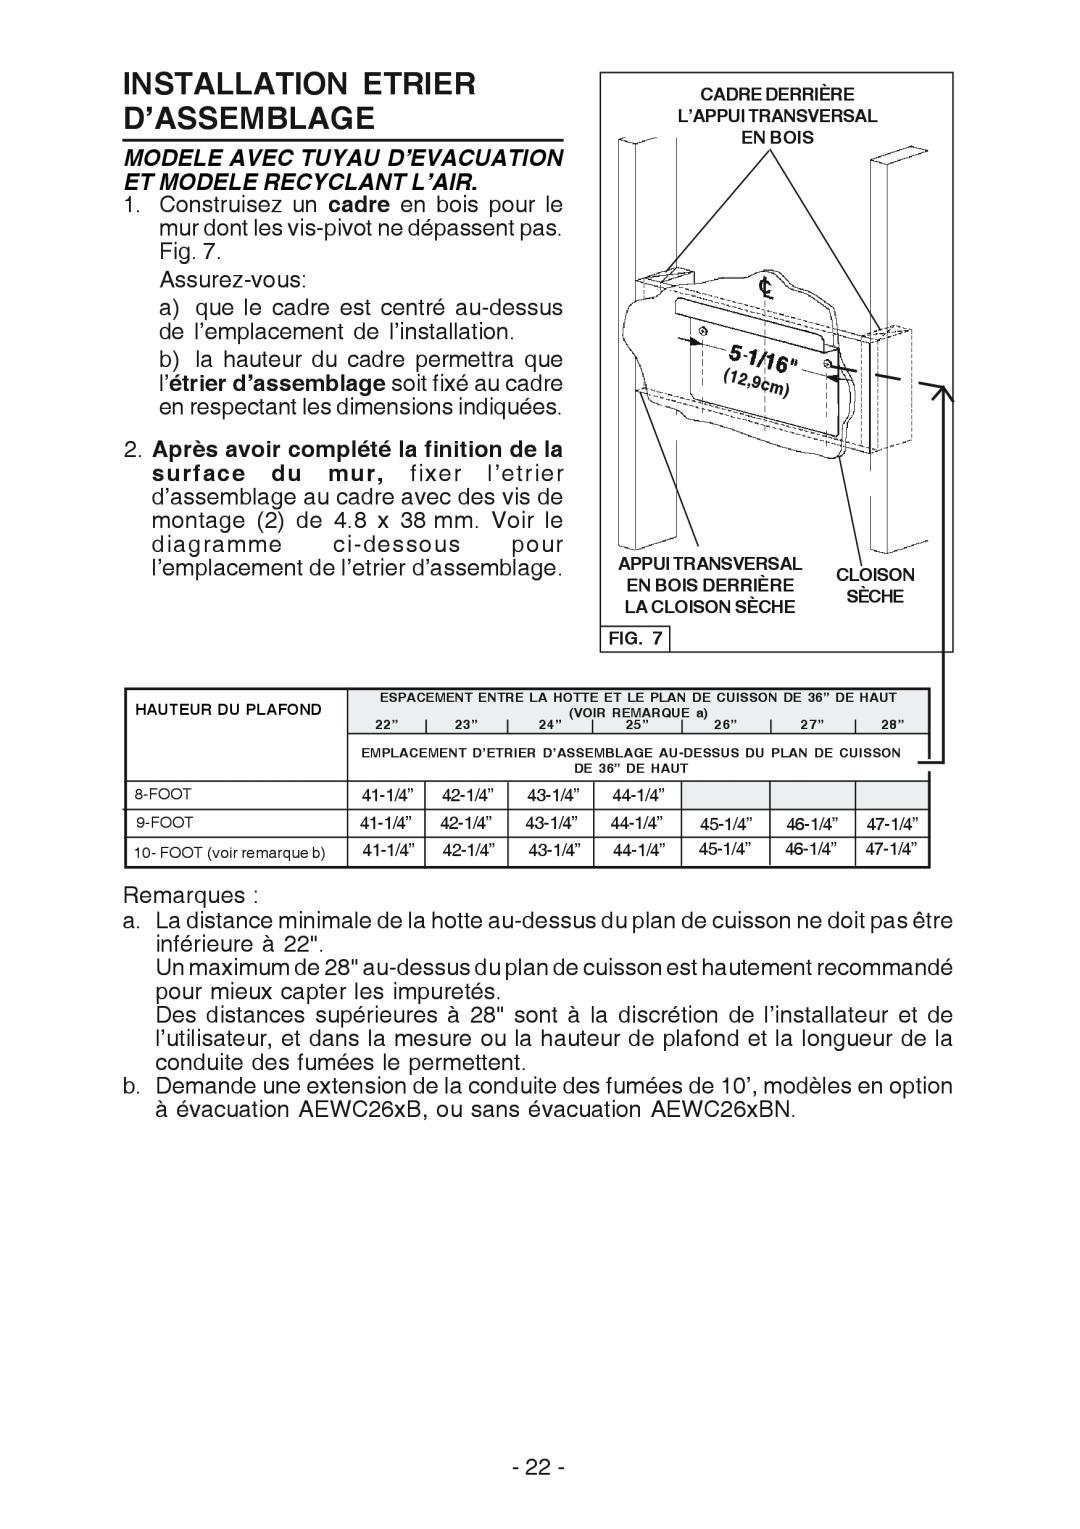 Broan WC26I manual Installation Etrier D’Assemblage 